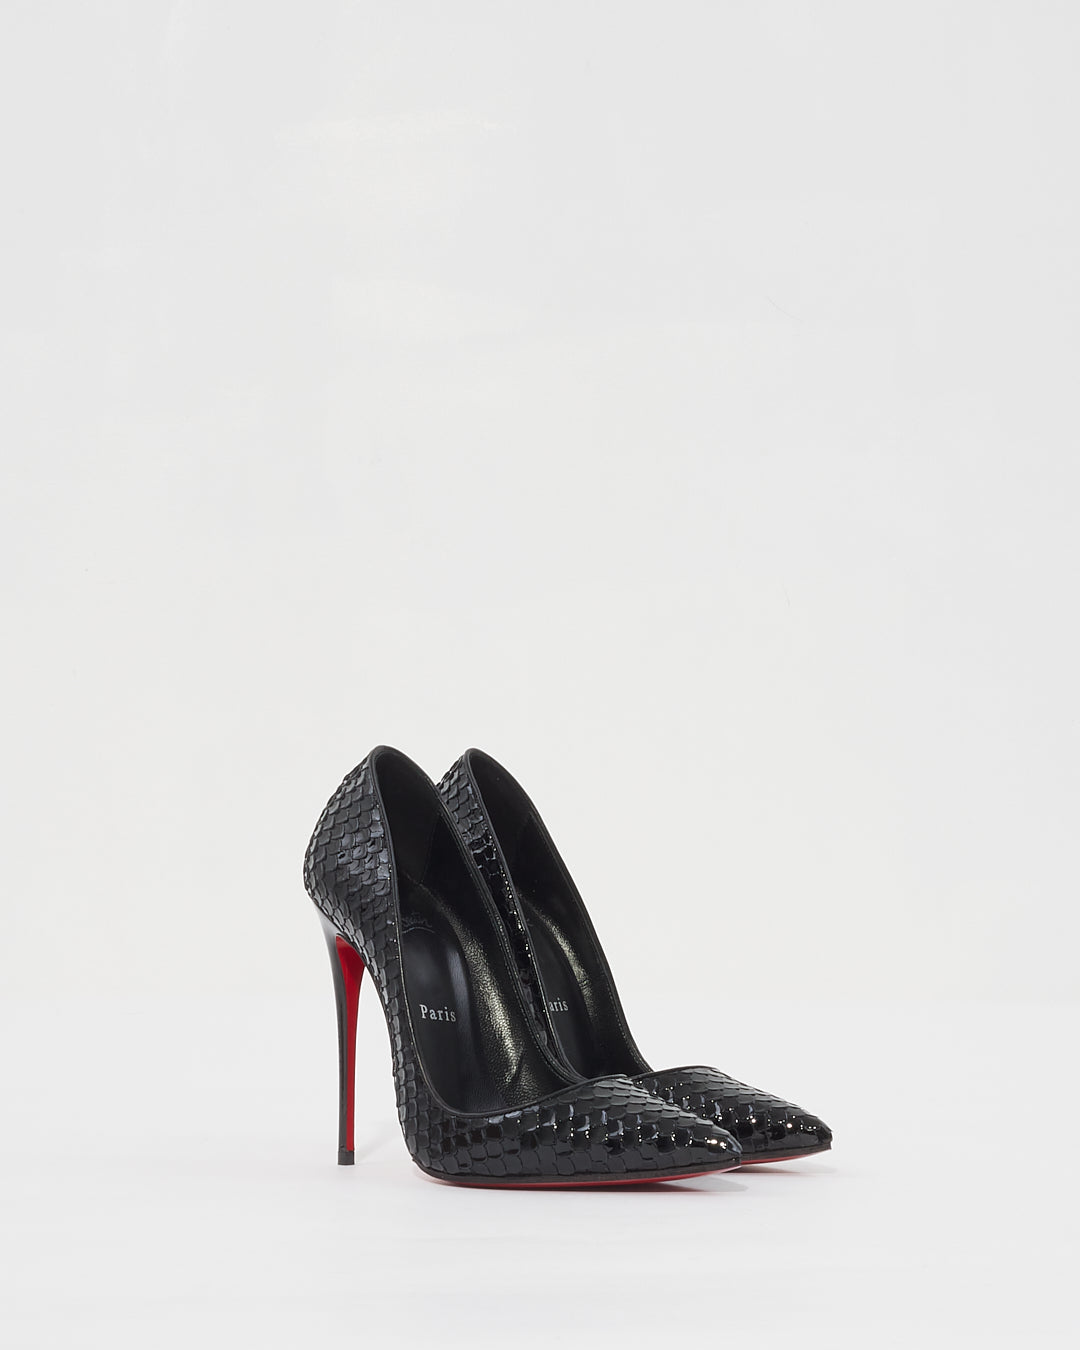 Christian Louboutin Black Patent Leather So Kate 120 Heels- 37